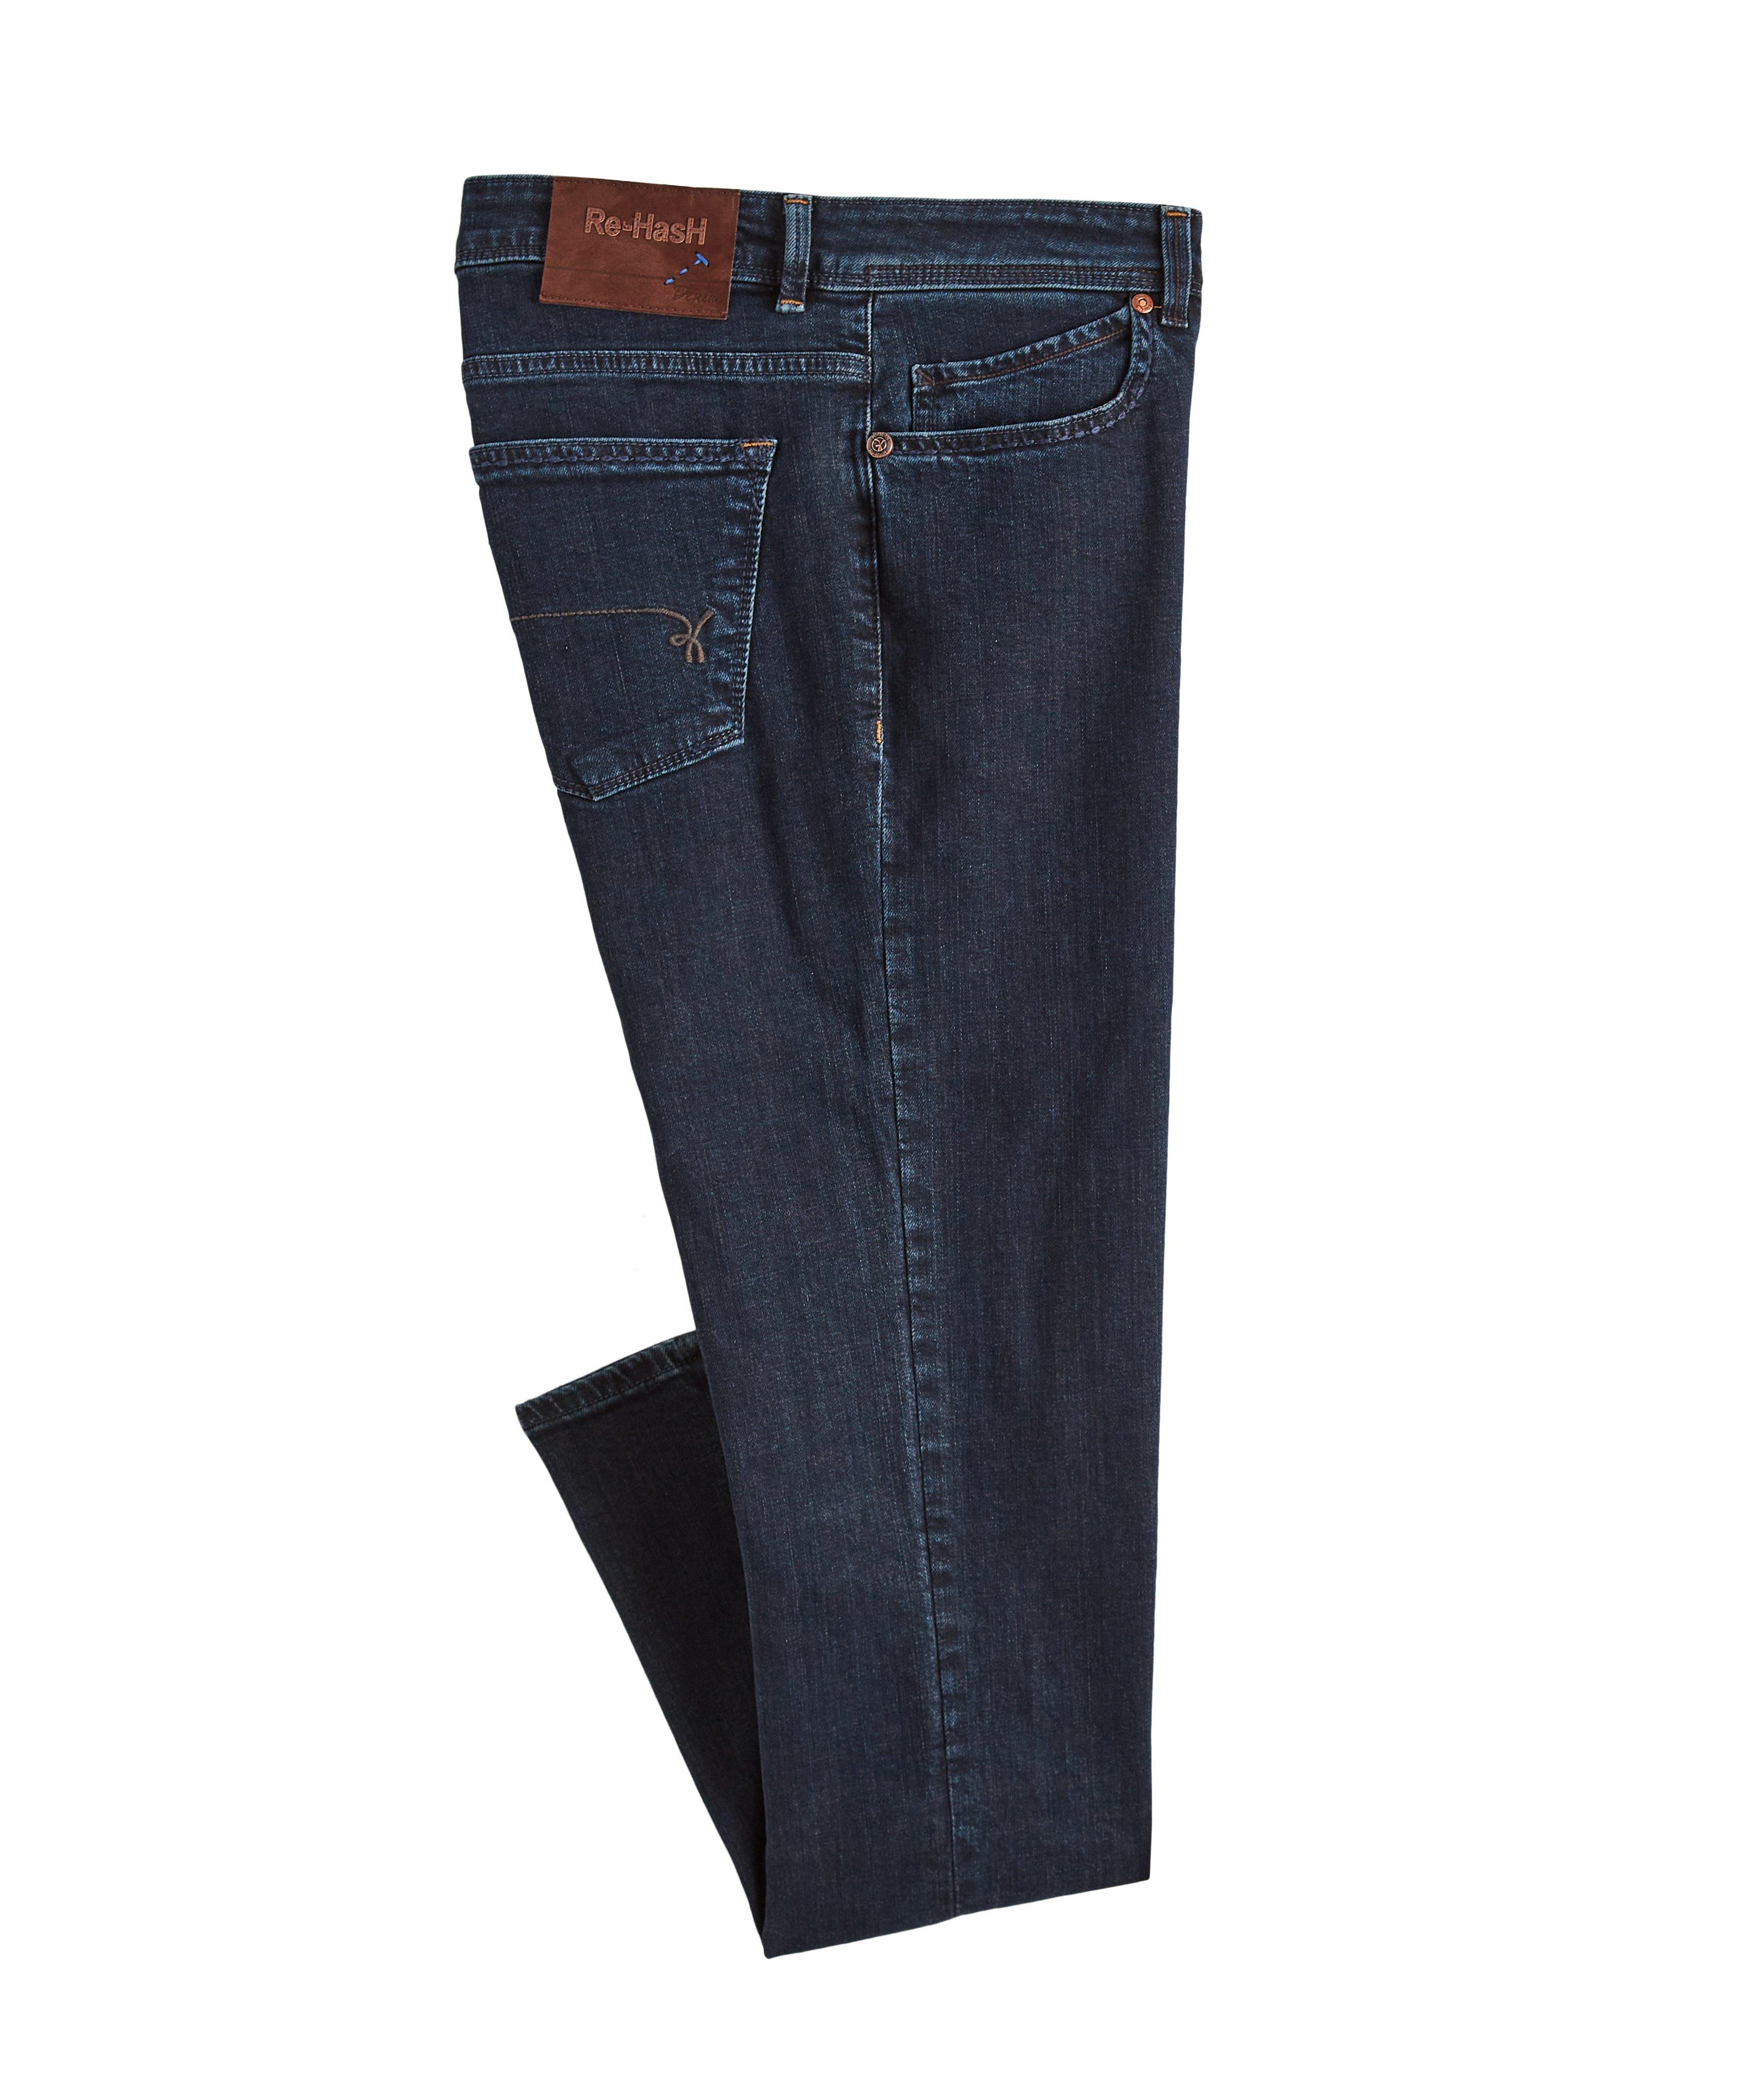 Rubens Slim-Fit Cotton Jeans image 0